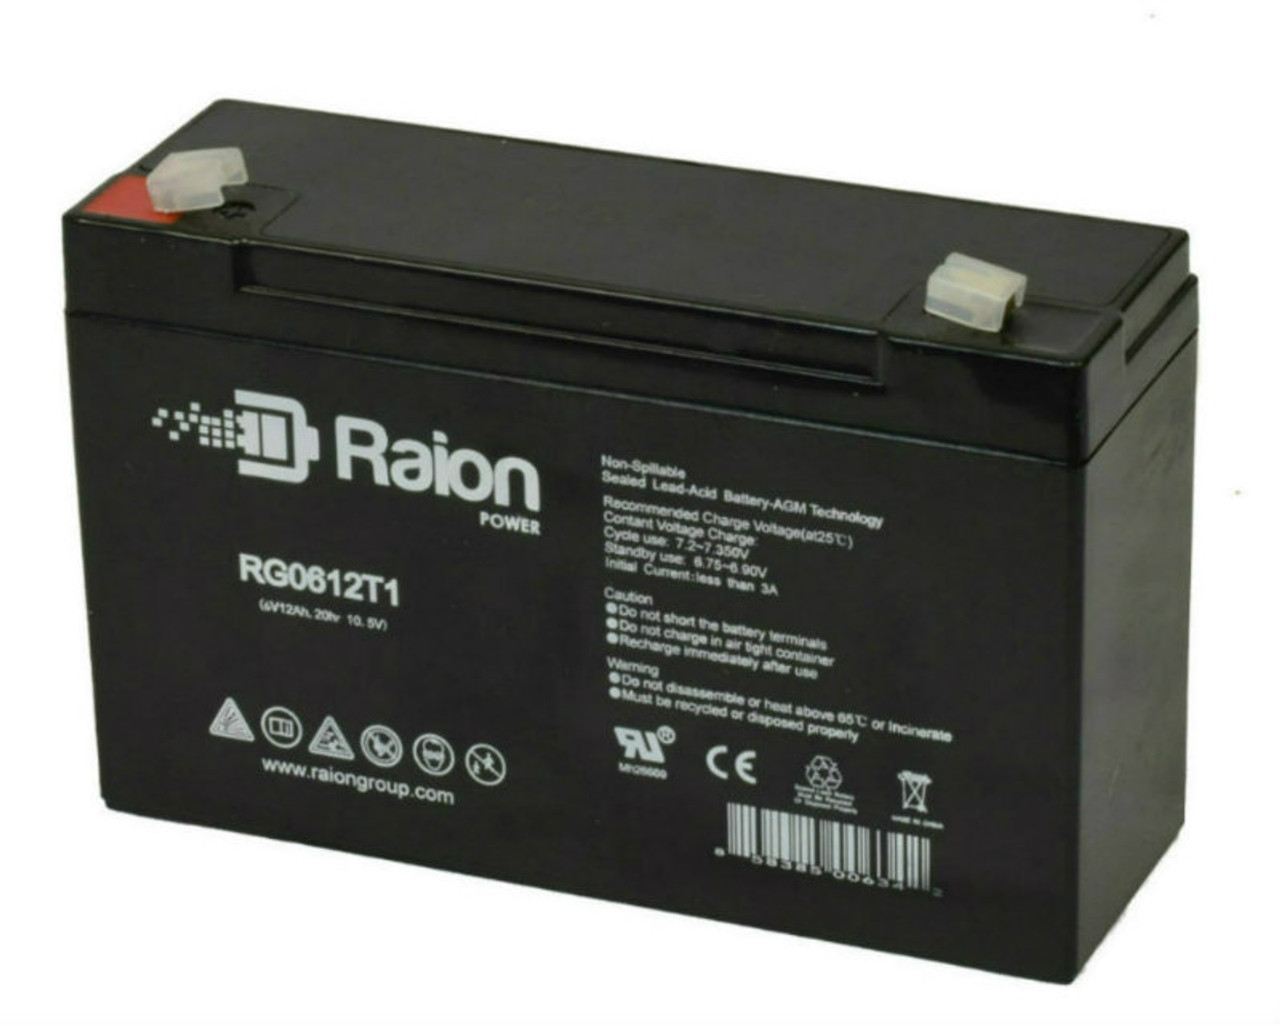 Raion Power RG06120T1 Replacement Battery for Alaris Medical Gemini 1320 Medical Equipment